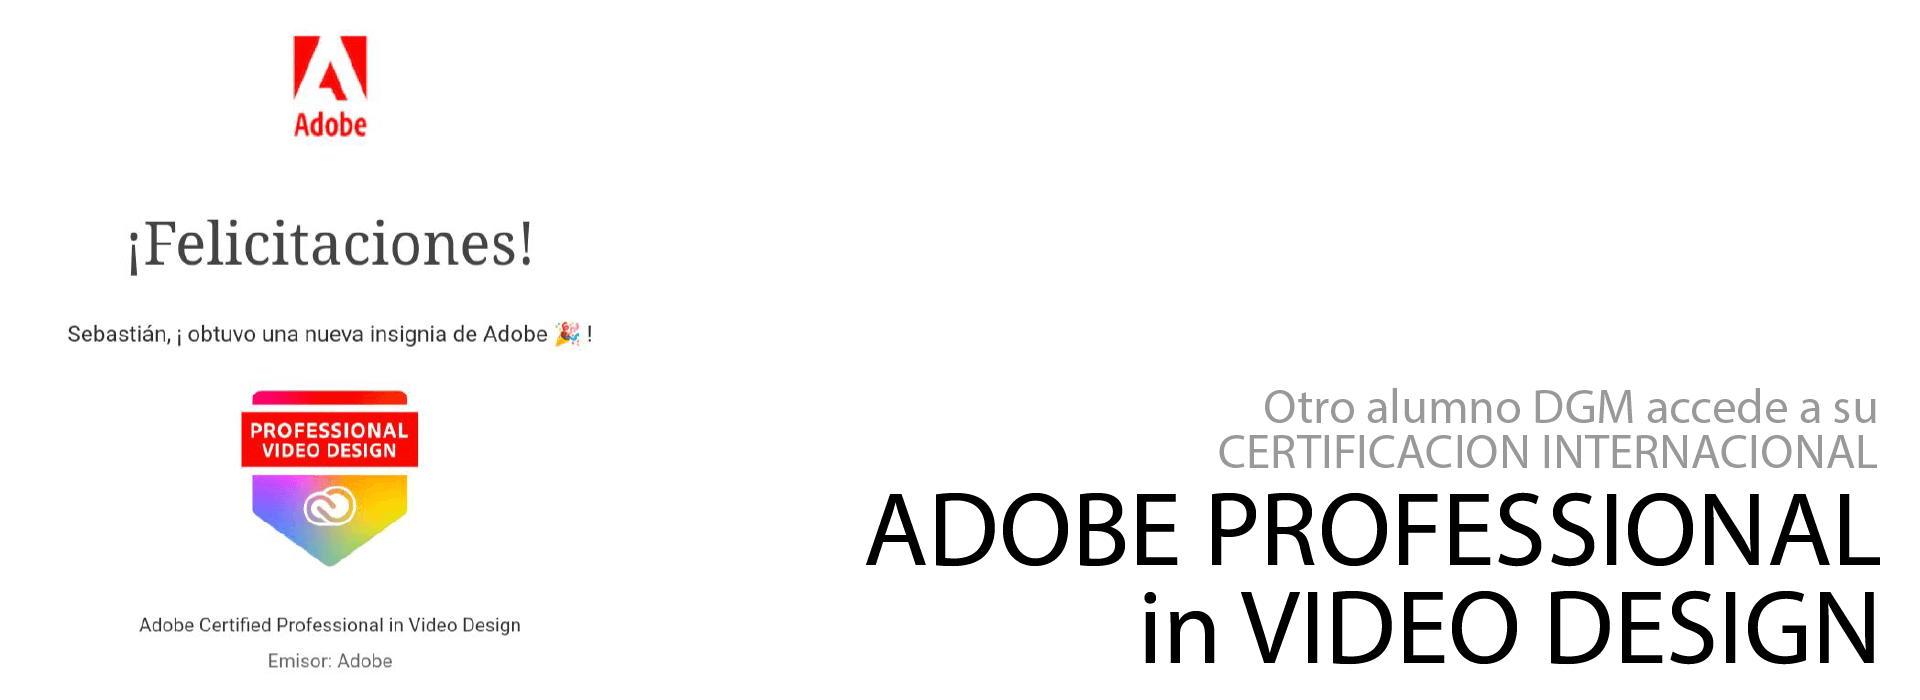 certificación adobe video design